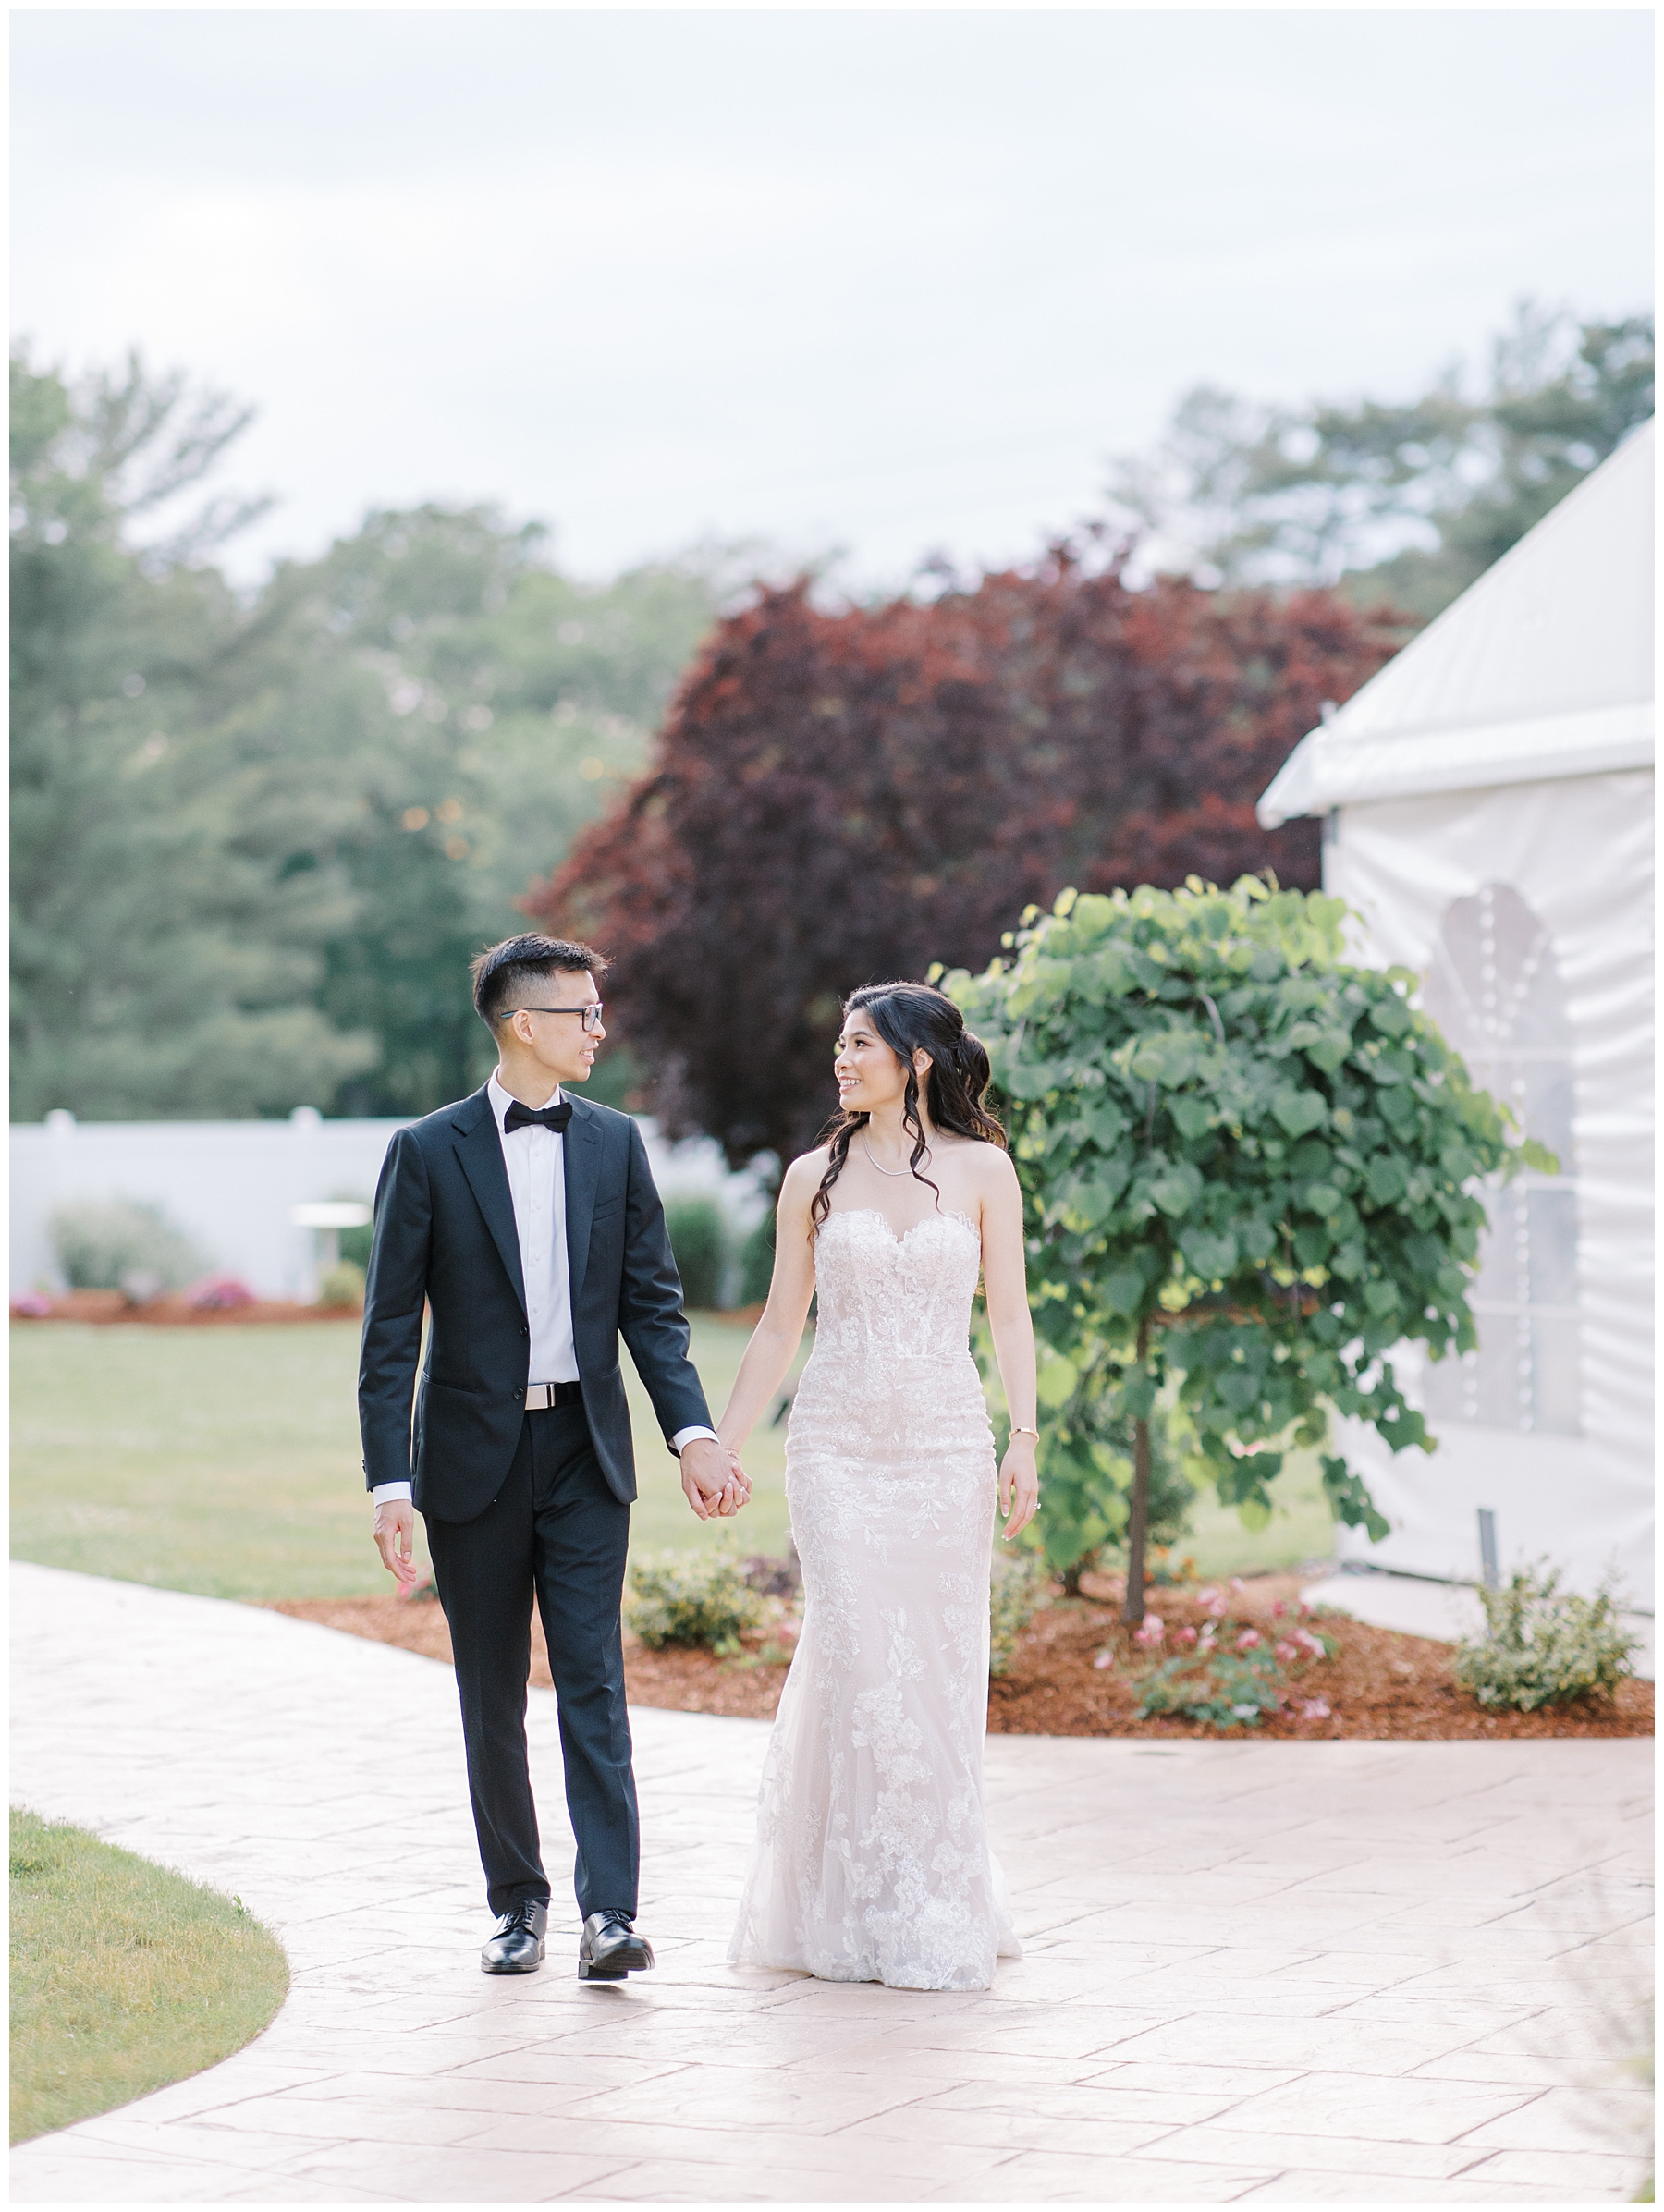 Boston wedding photographer, Stephanie Berenson, captures newlyweds 